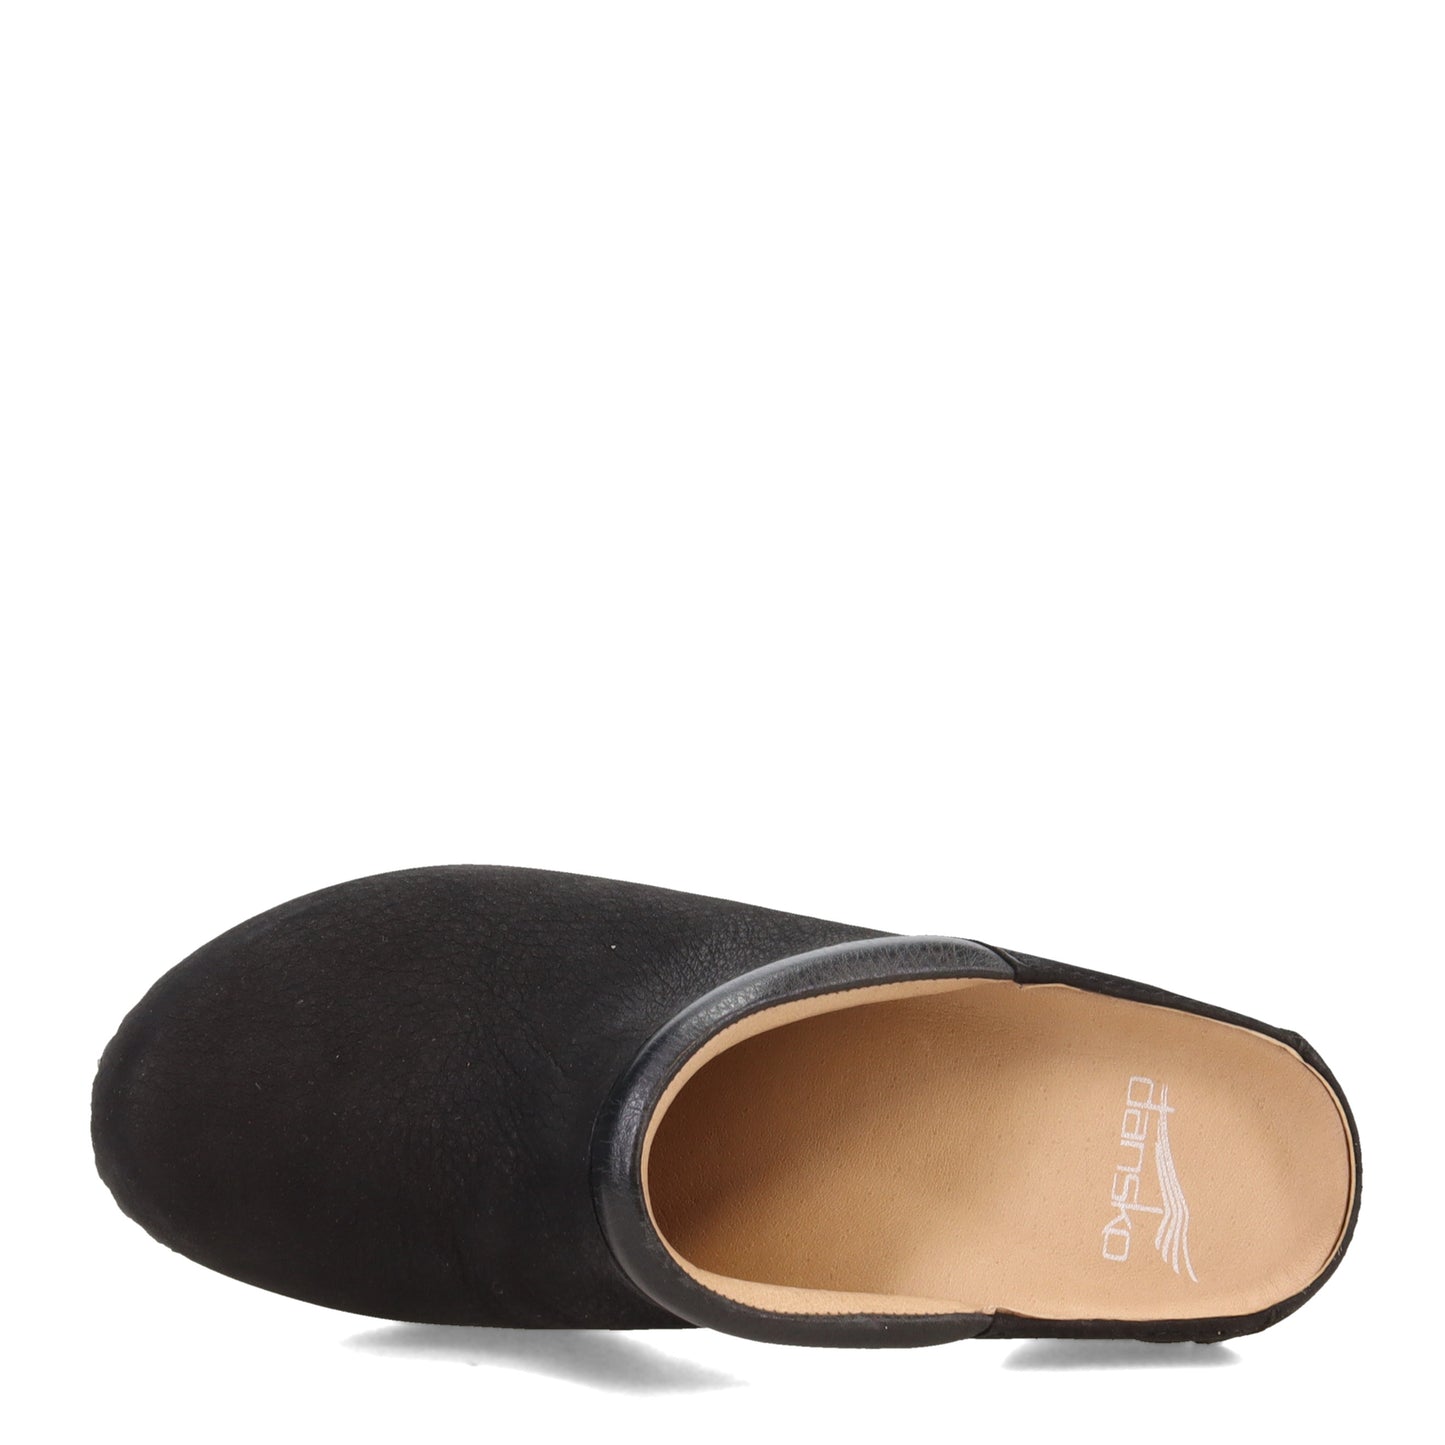 Peltz Shoes  Women's Dansko Sammy Clog Black 1830-472400